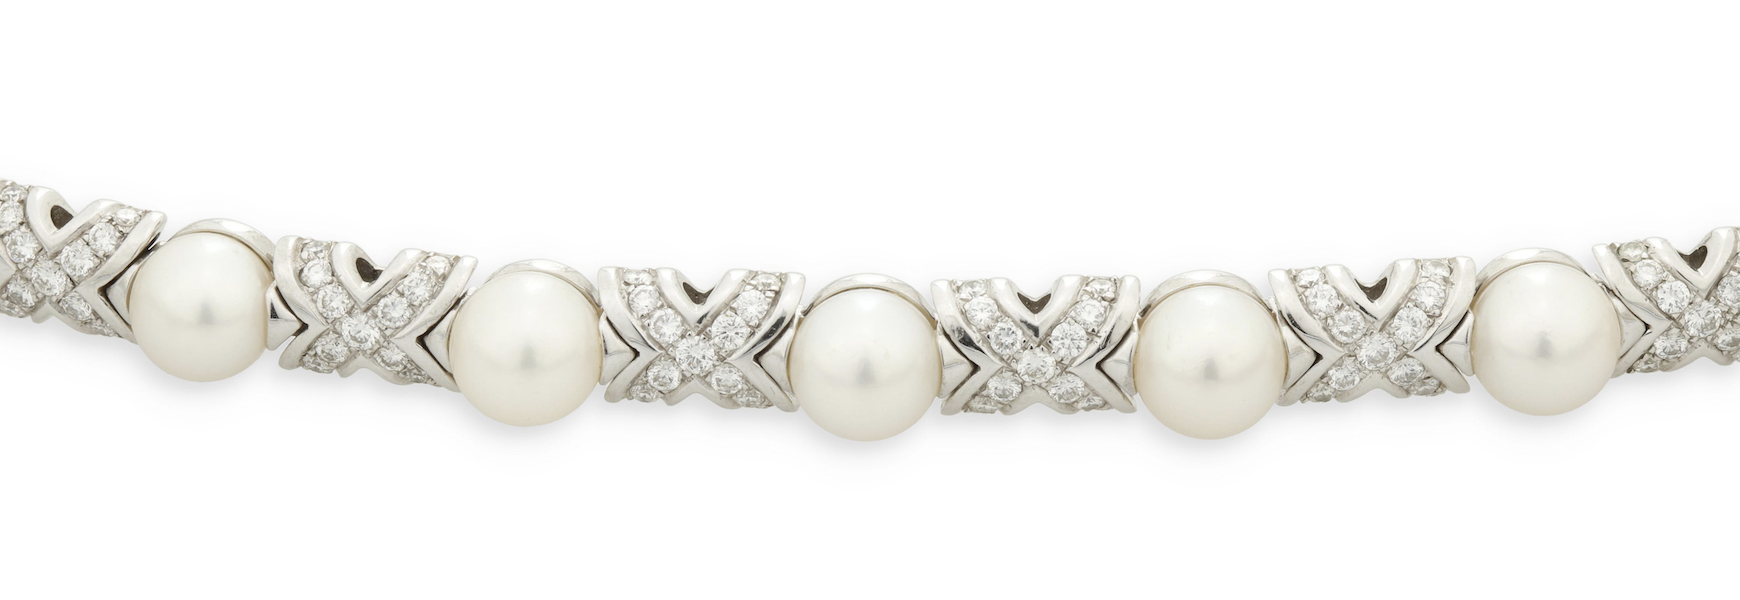 Bulgari cultured pearl and diamond necklace, $8,125